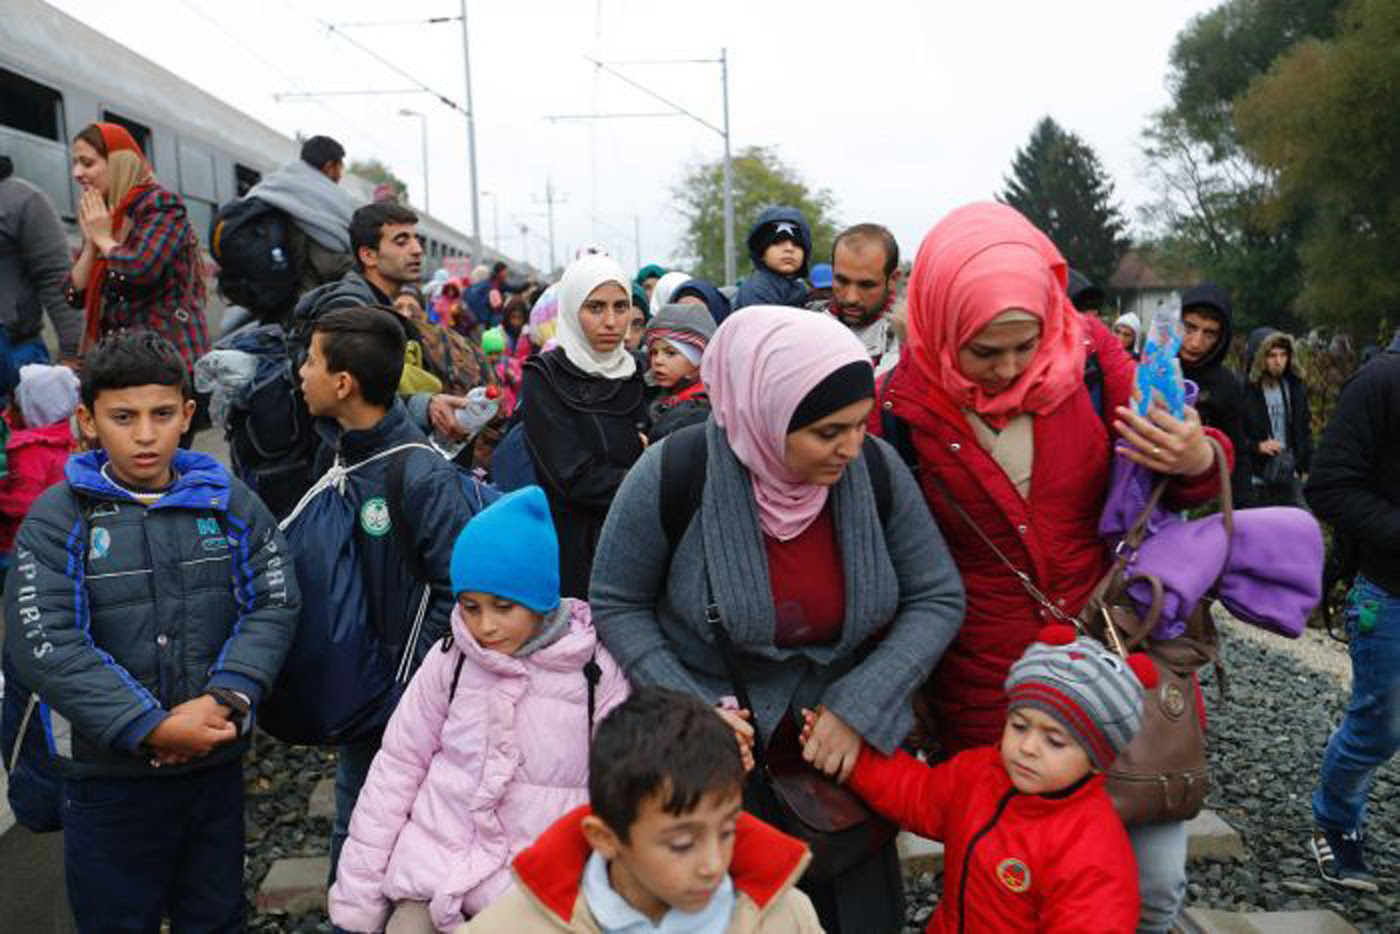 Syrian migrants in camp Opatovac in Croatia - Saturday 17 October 2015 Photo: Reuters/Marko Durica